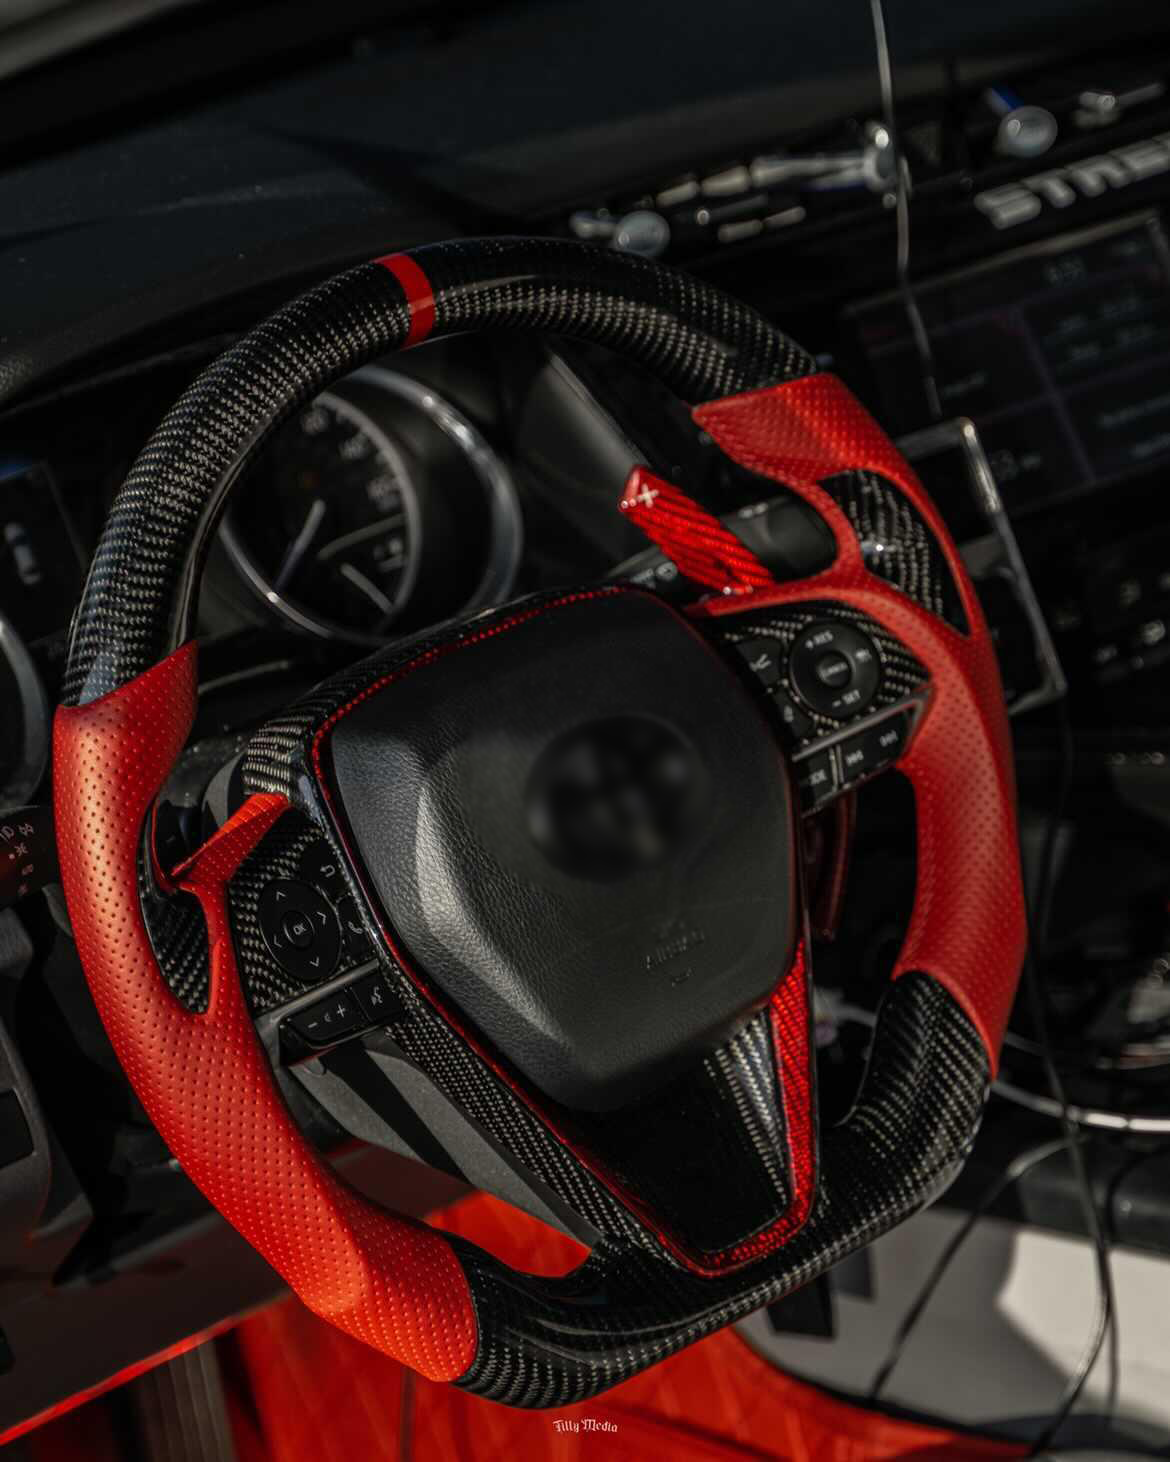 Toyota Camry 18+ Custom Steering Wheel